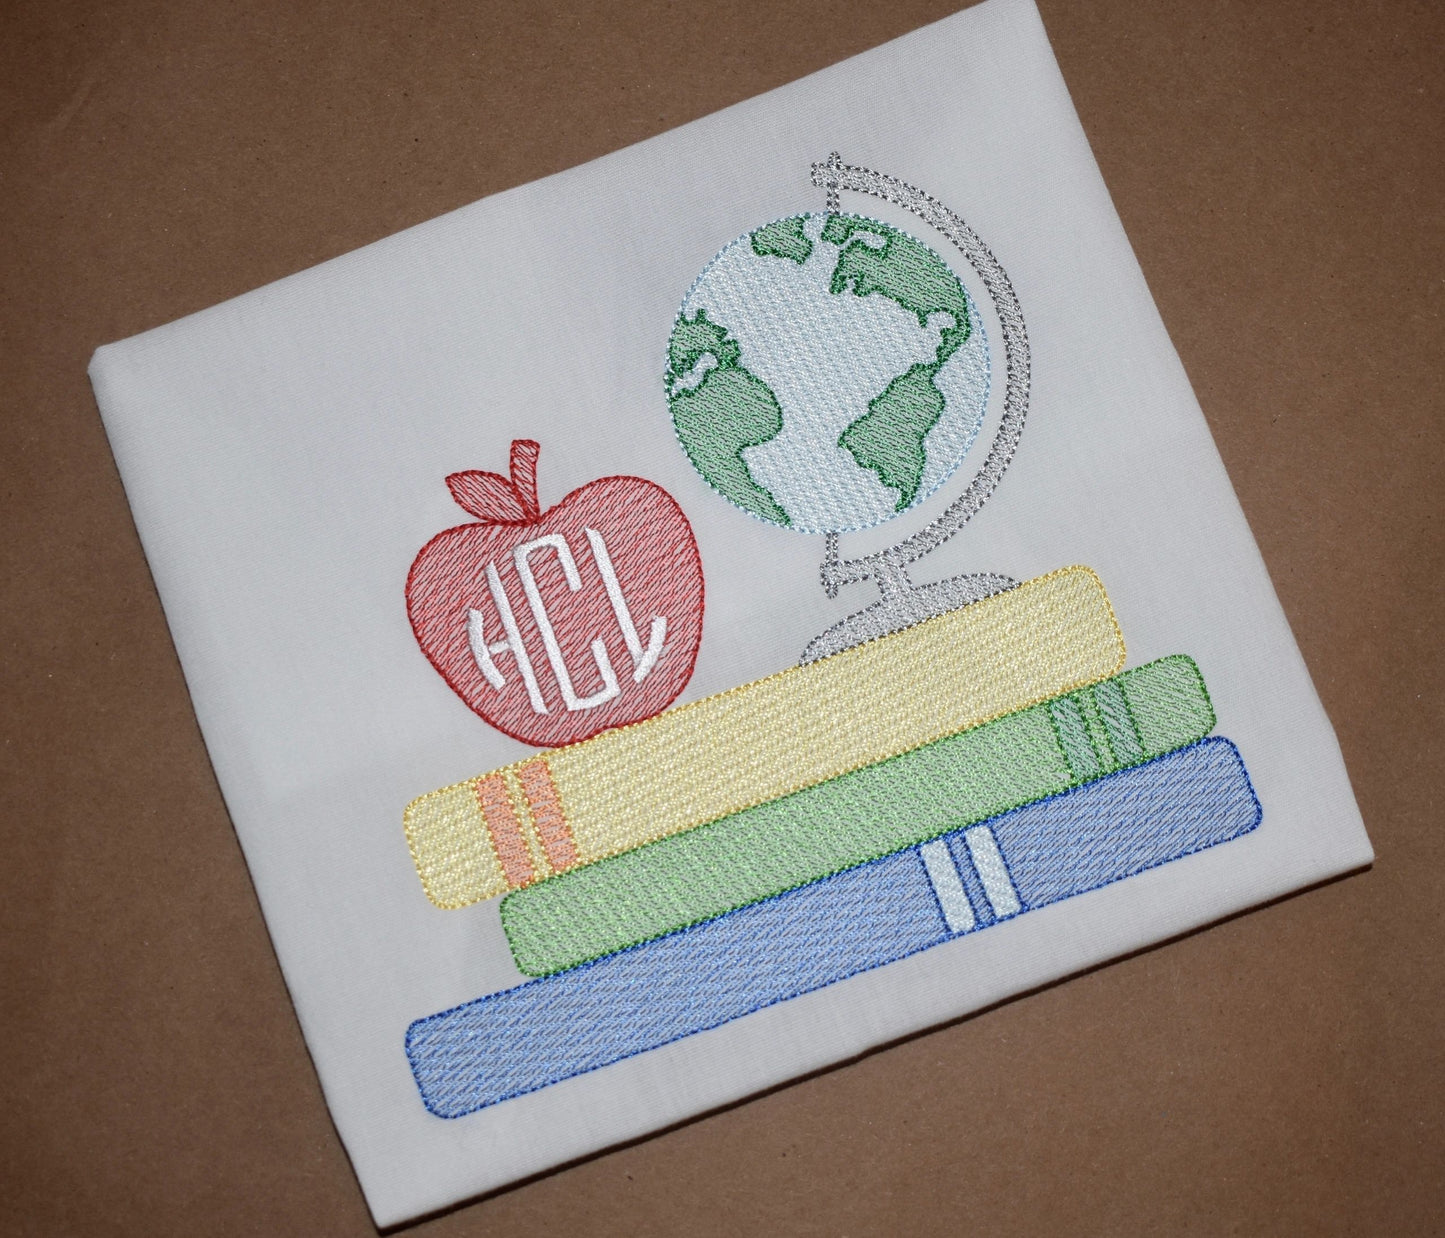 School Books Sketch Embroidery Design